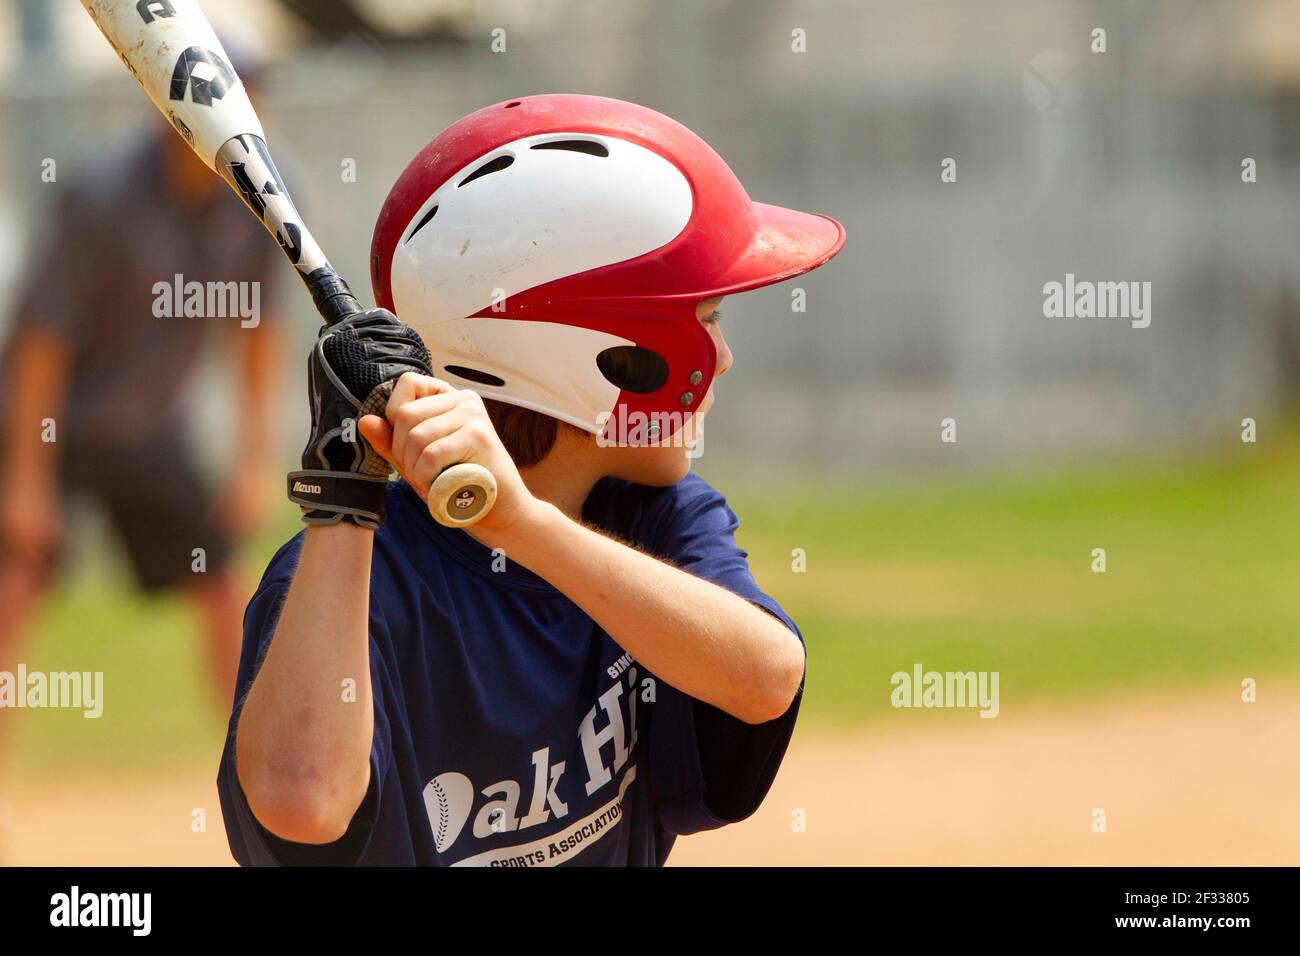 A teenage boy batting during a baseball game. Stock Photo